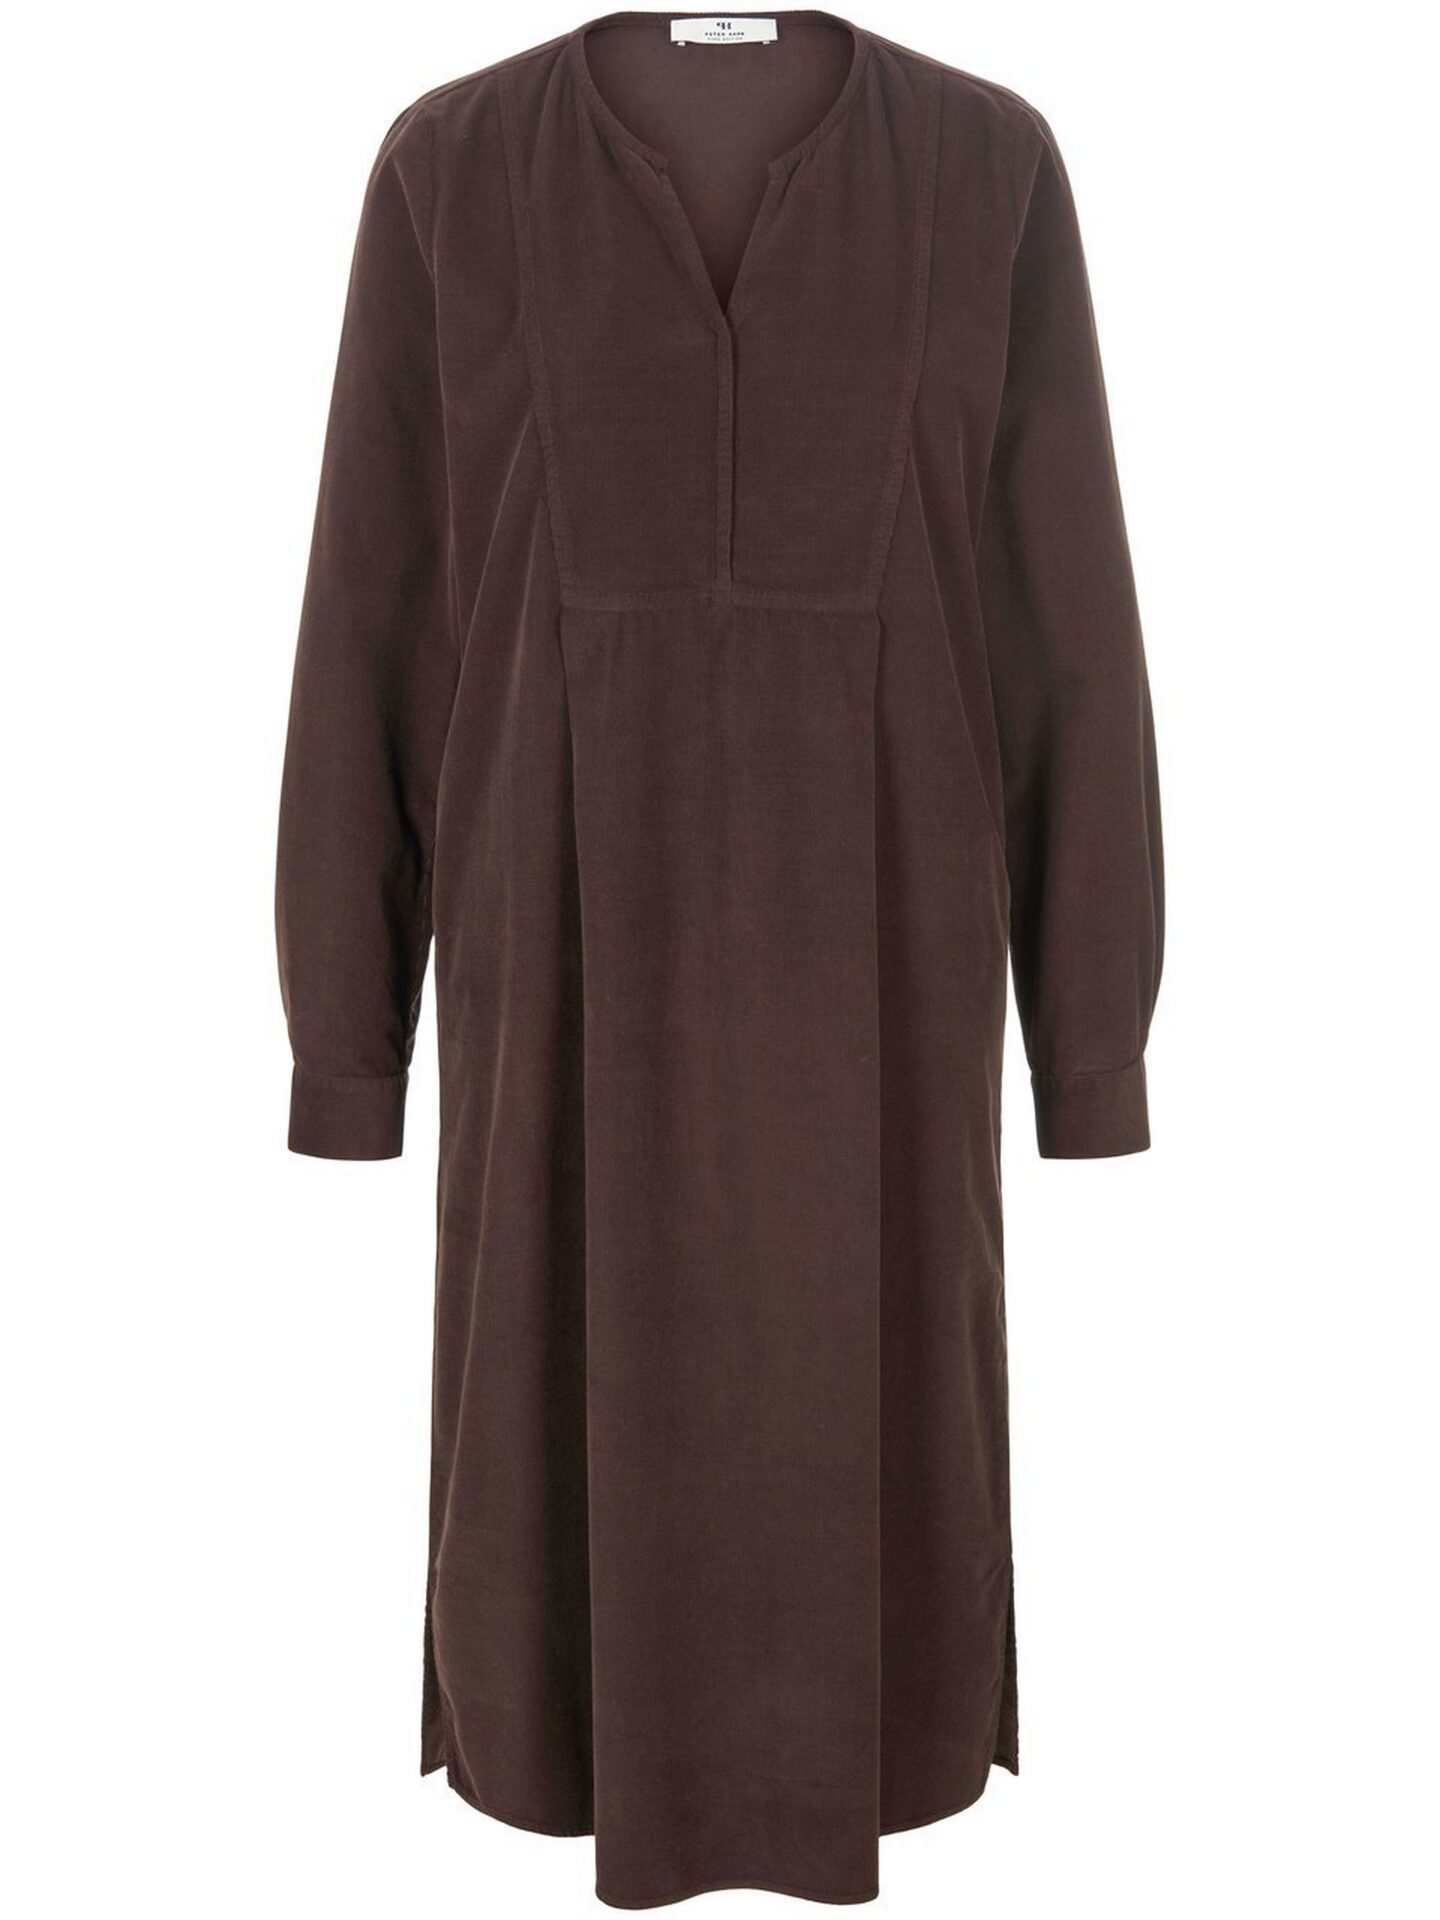 Corduroy jurk 100% katoen Van PETER HAHN PURE EDITION bruin